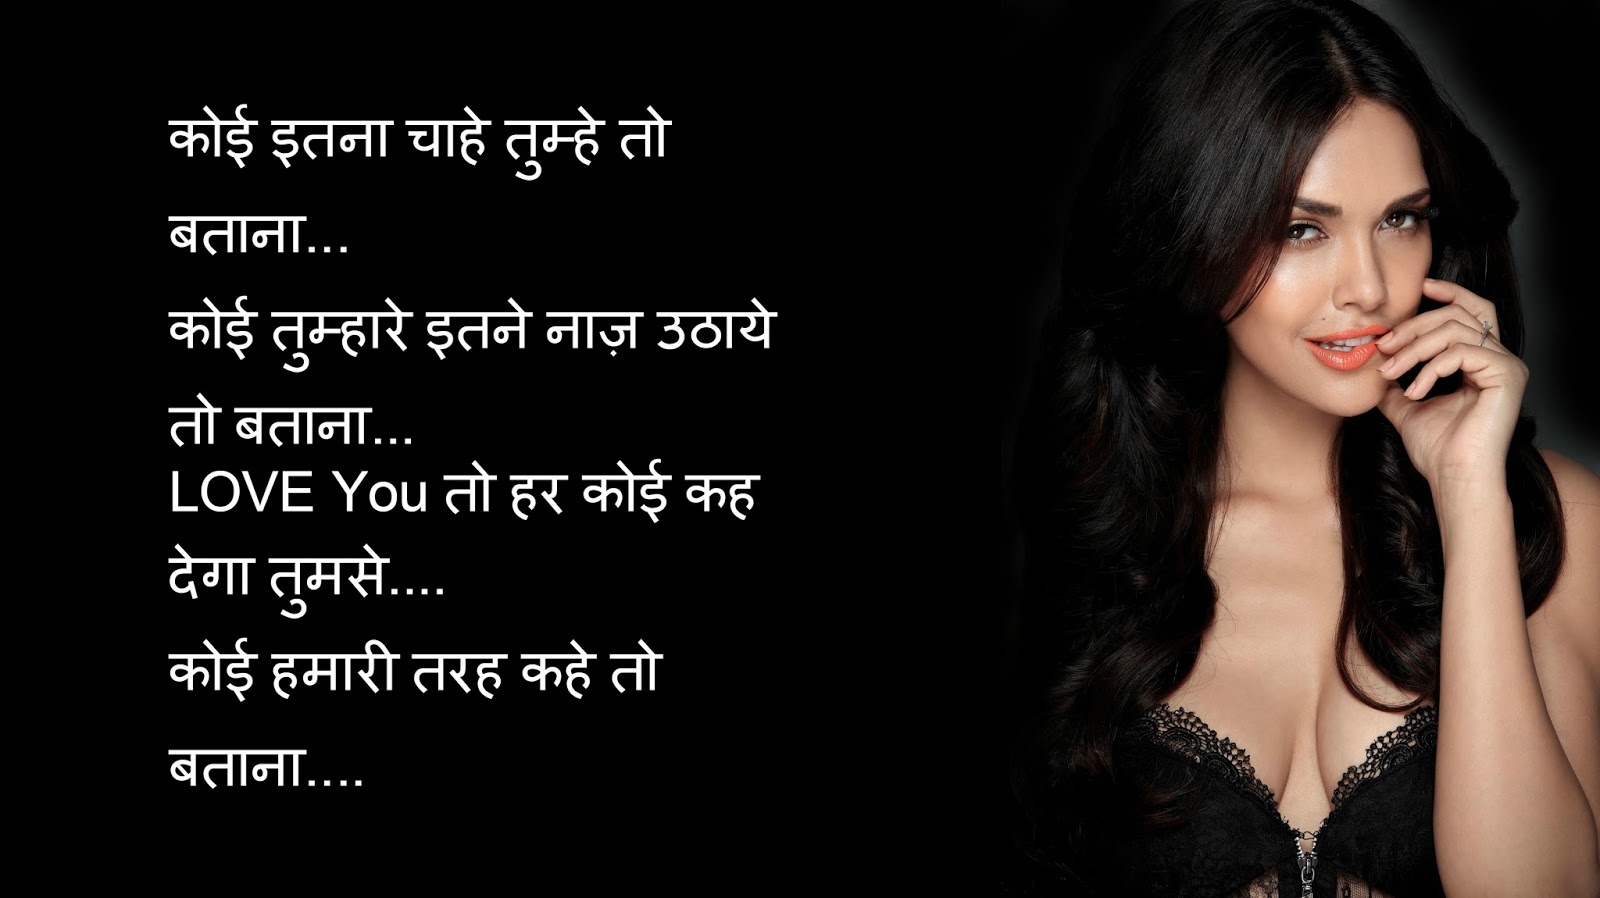 Hindi Poetry with images Latest Love Shayari in Hindi.